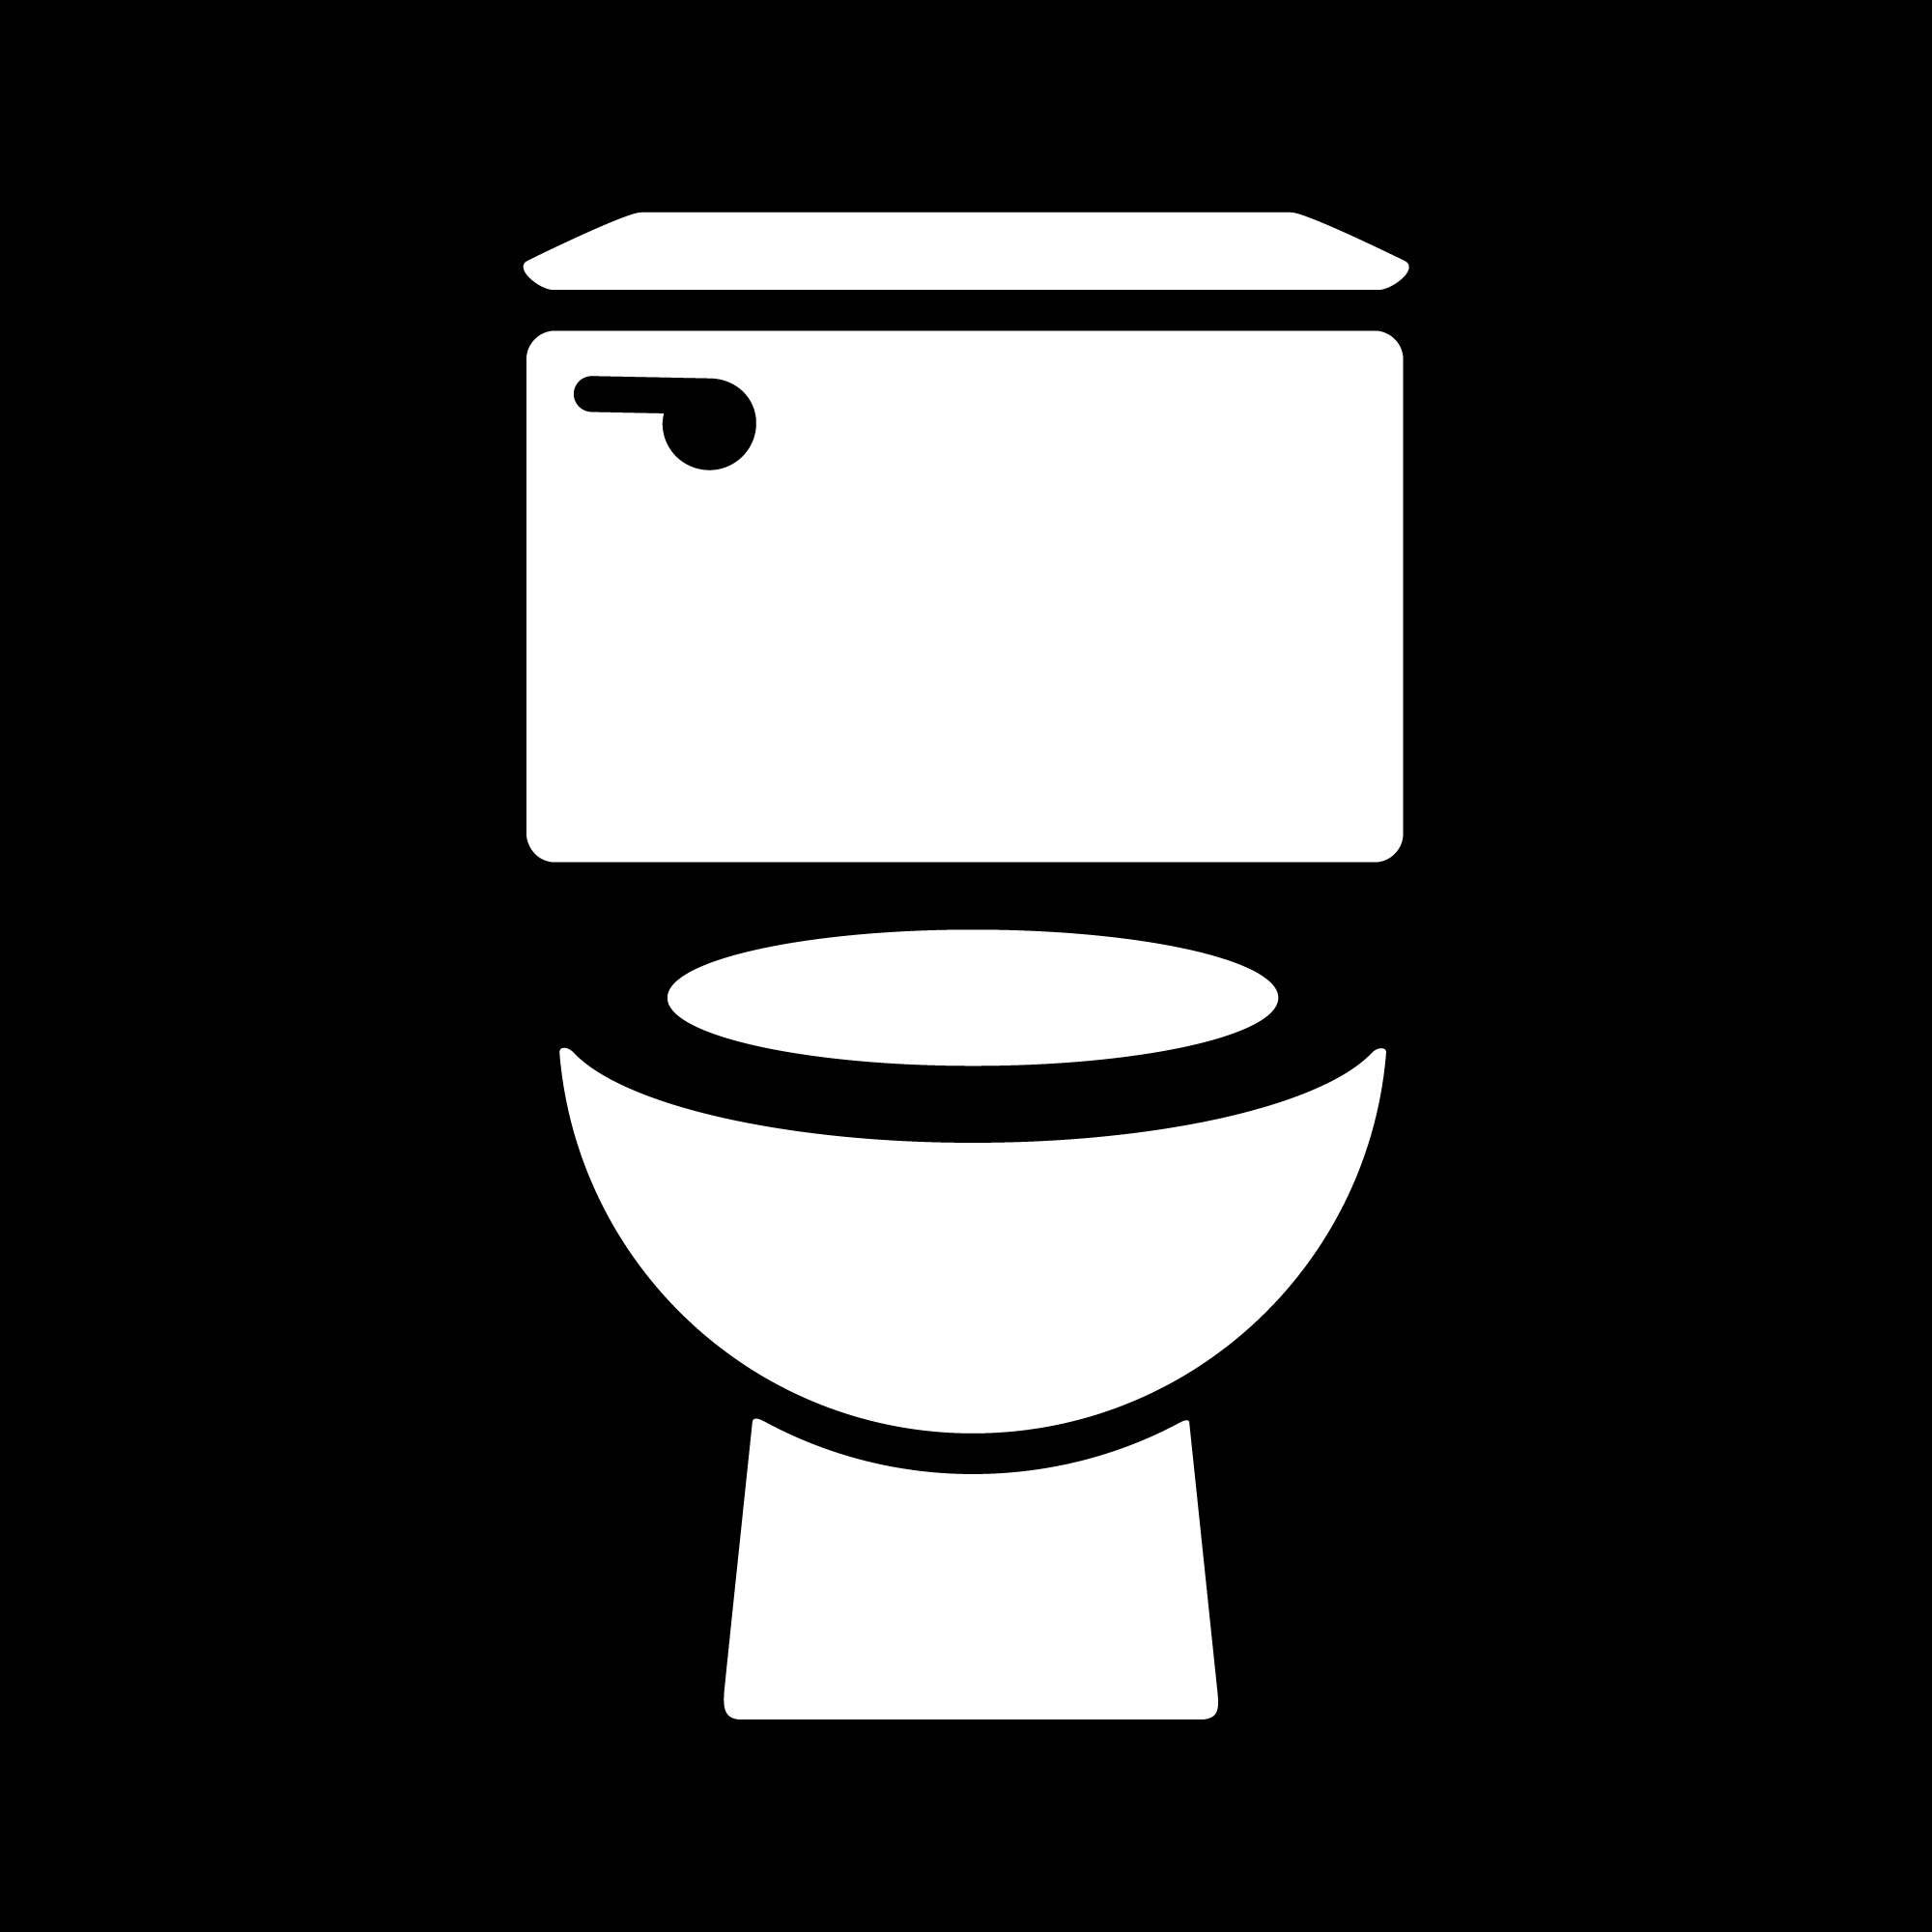 Унитаз av. Унитаз значок. Пиктограмма унитаз. Логотип туалета. Табличка туалет унитаз.